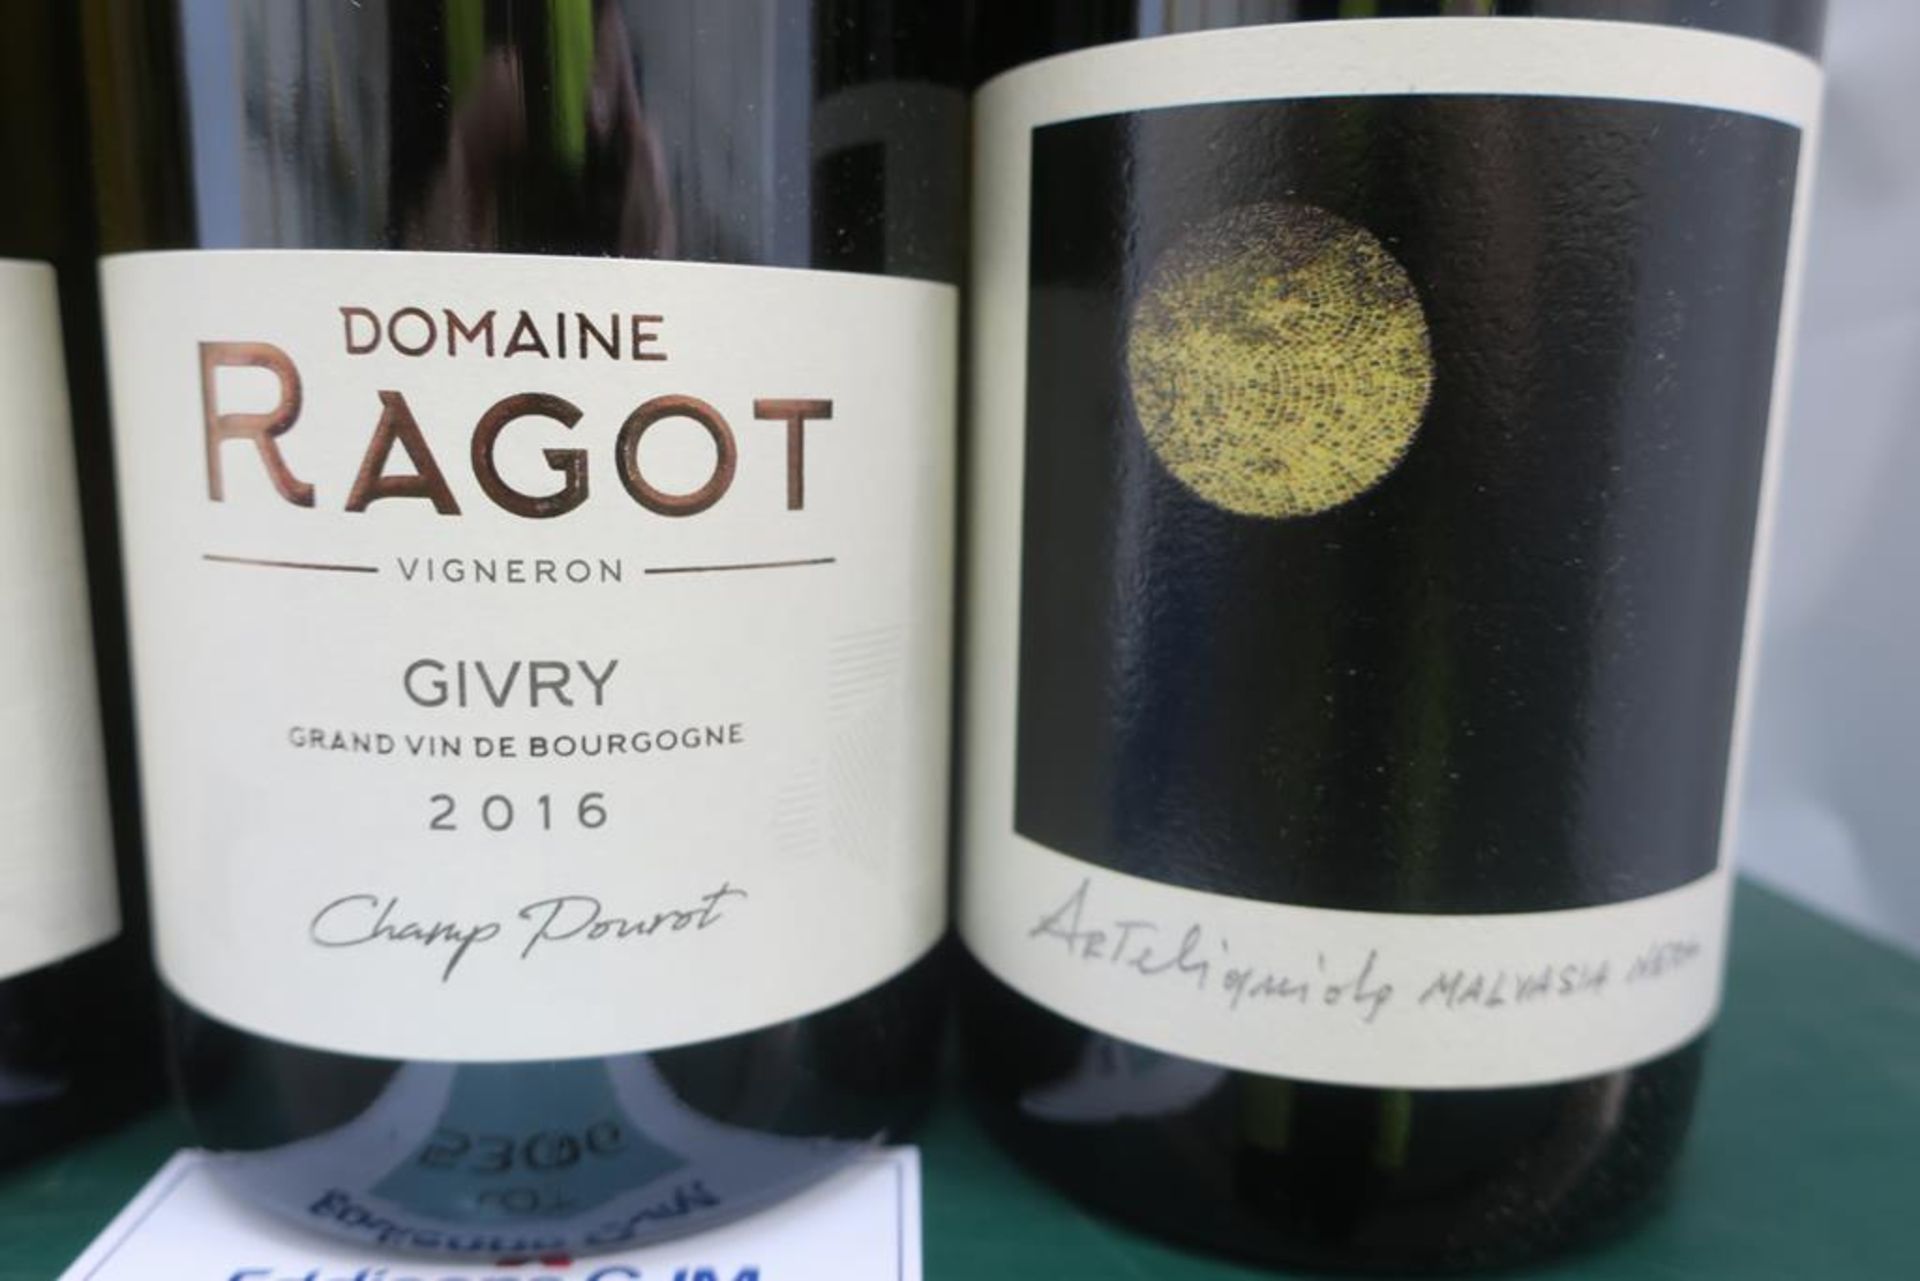 Domaine Ragot Givry and Monte Chiaro Arteliquida Wine - Image 2 of 3